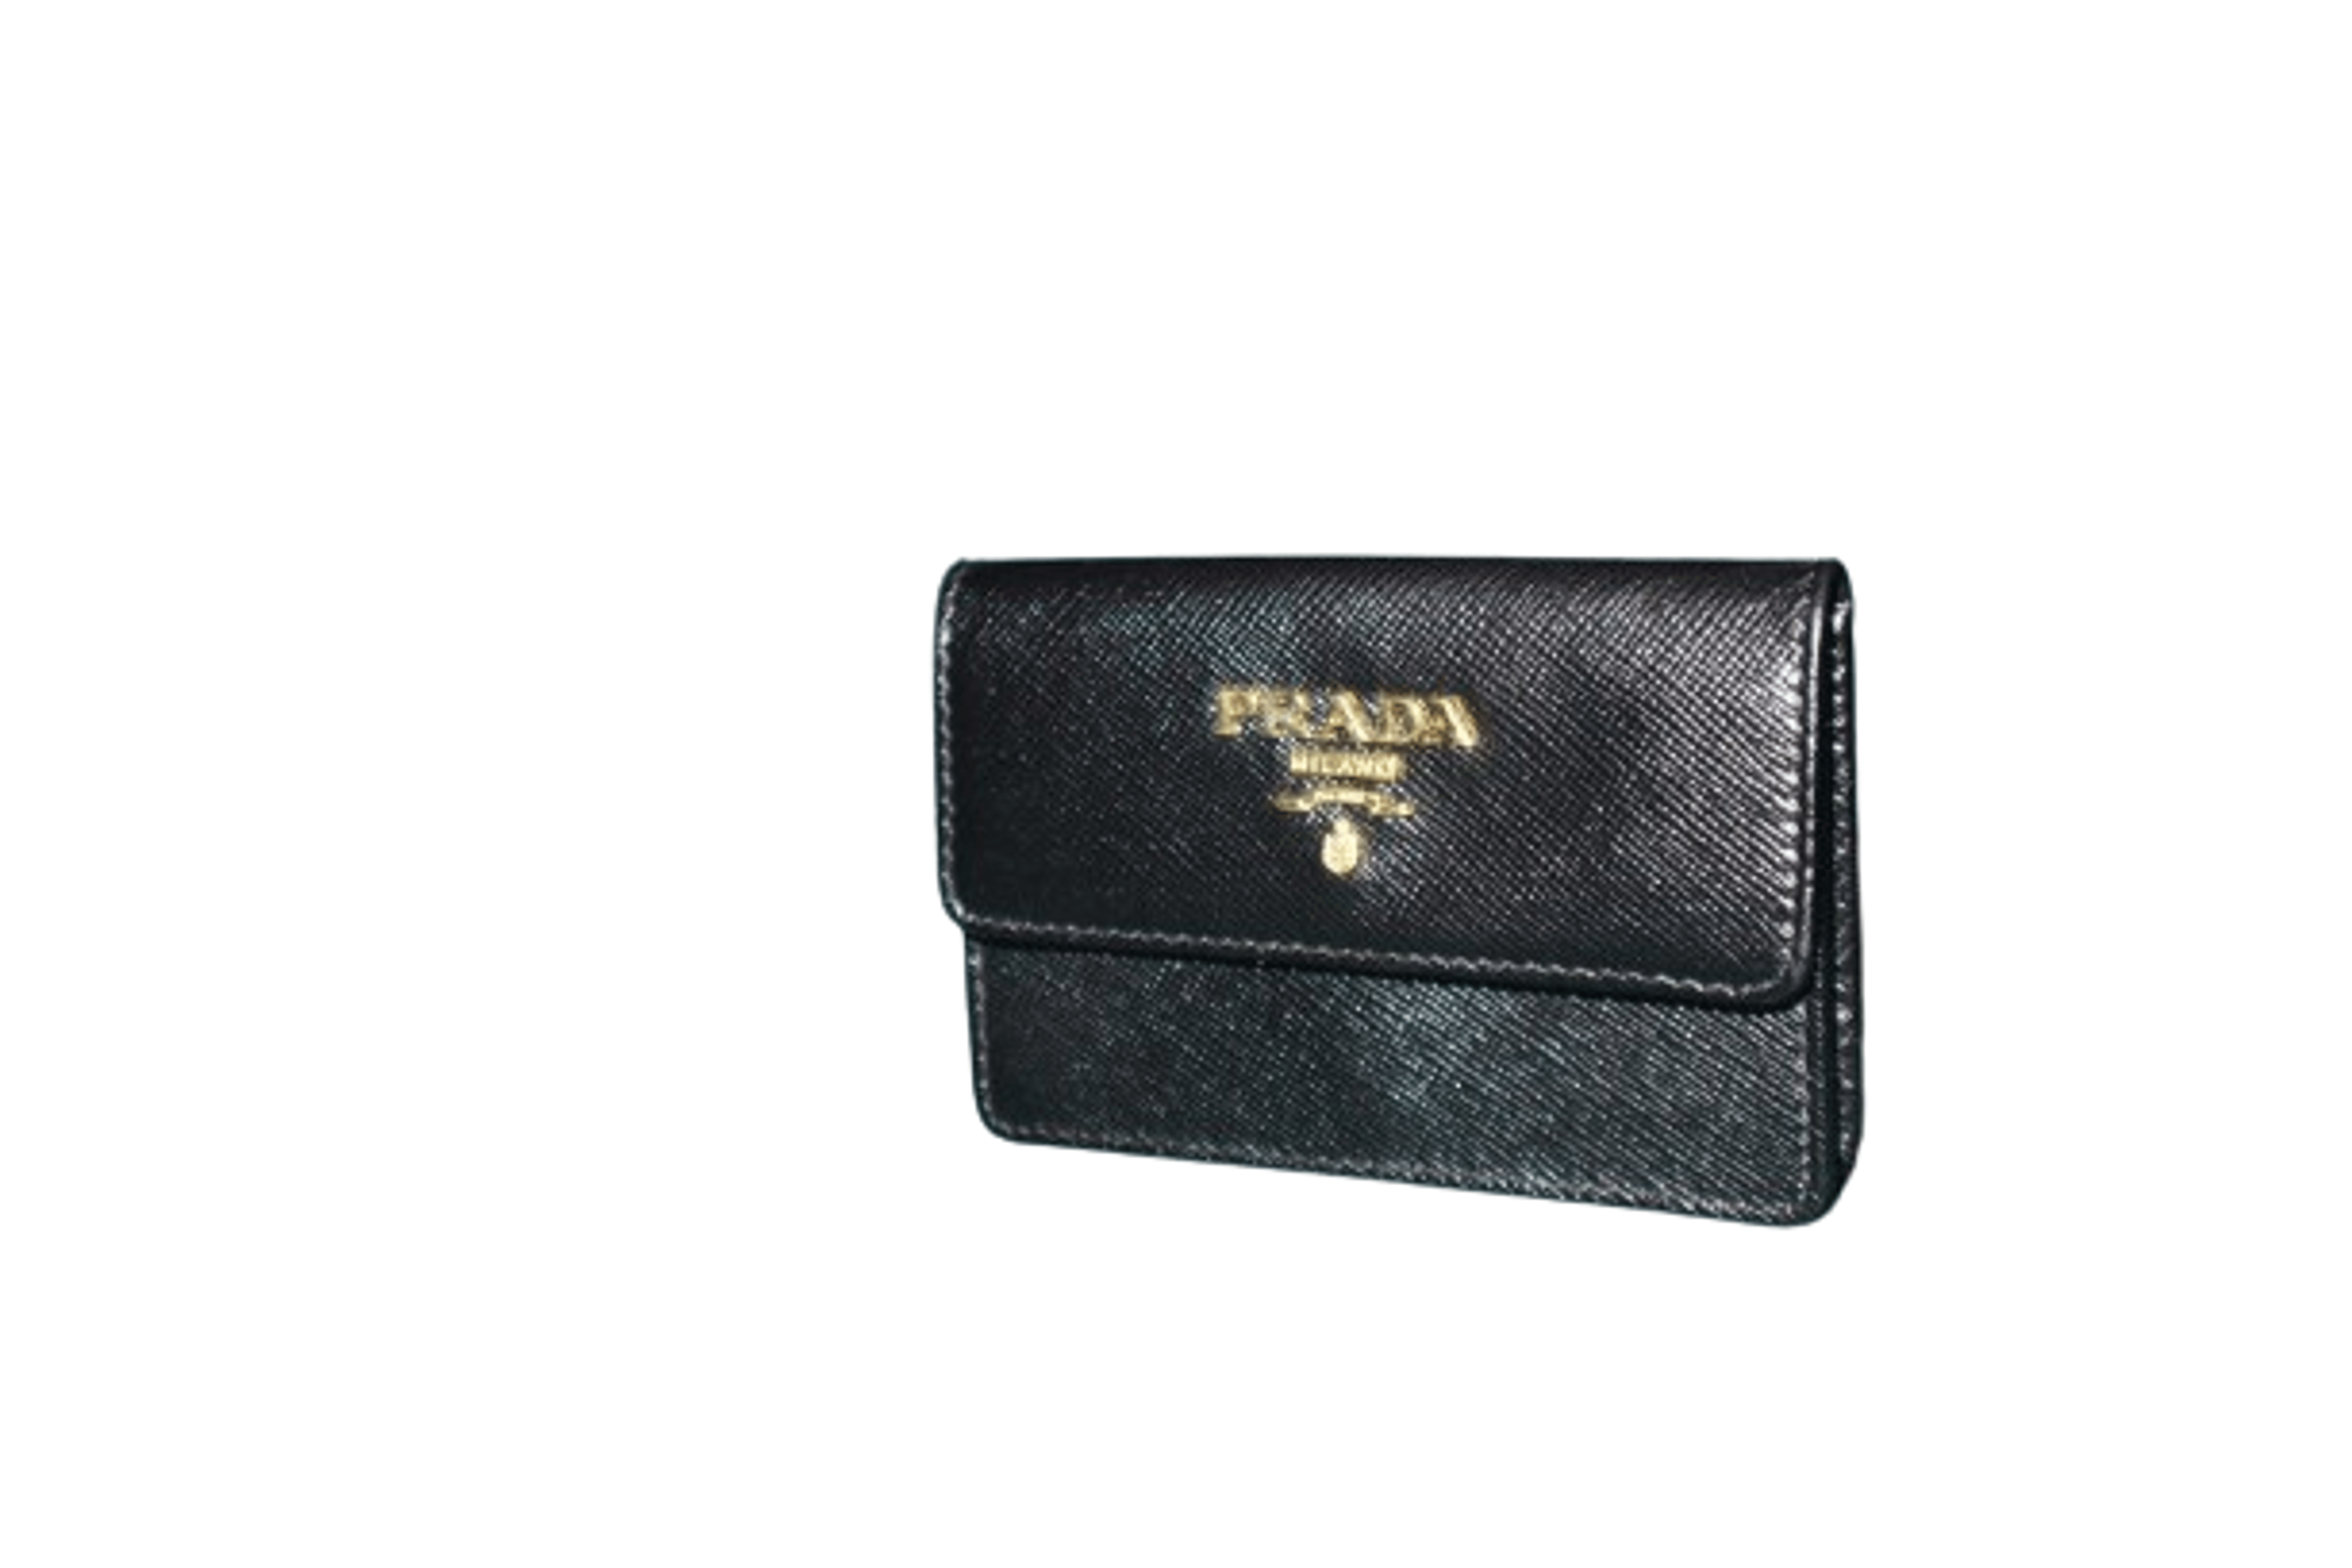 Alternate View 3 of Prada Black Saffiano Leather Flap Card Holder NEW